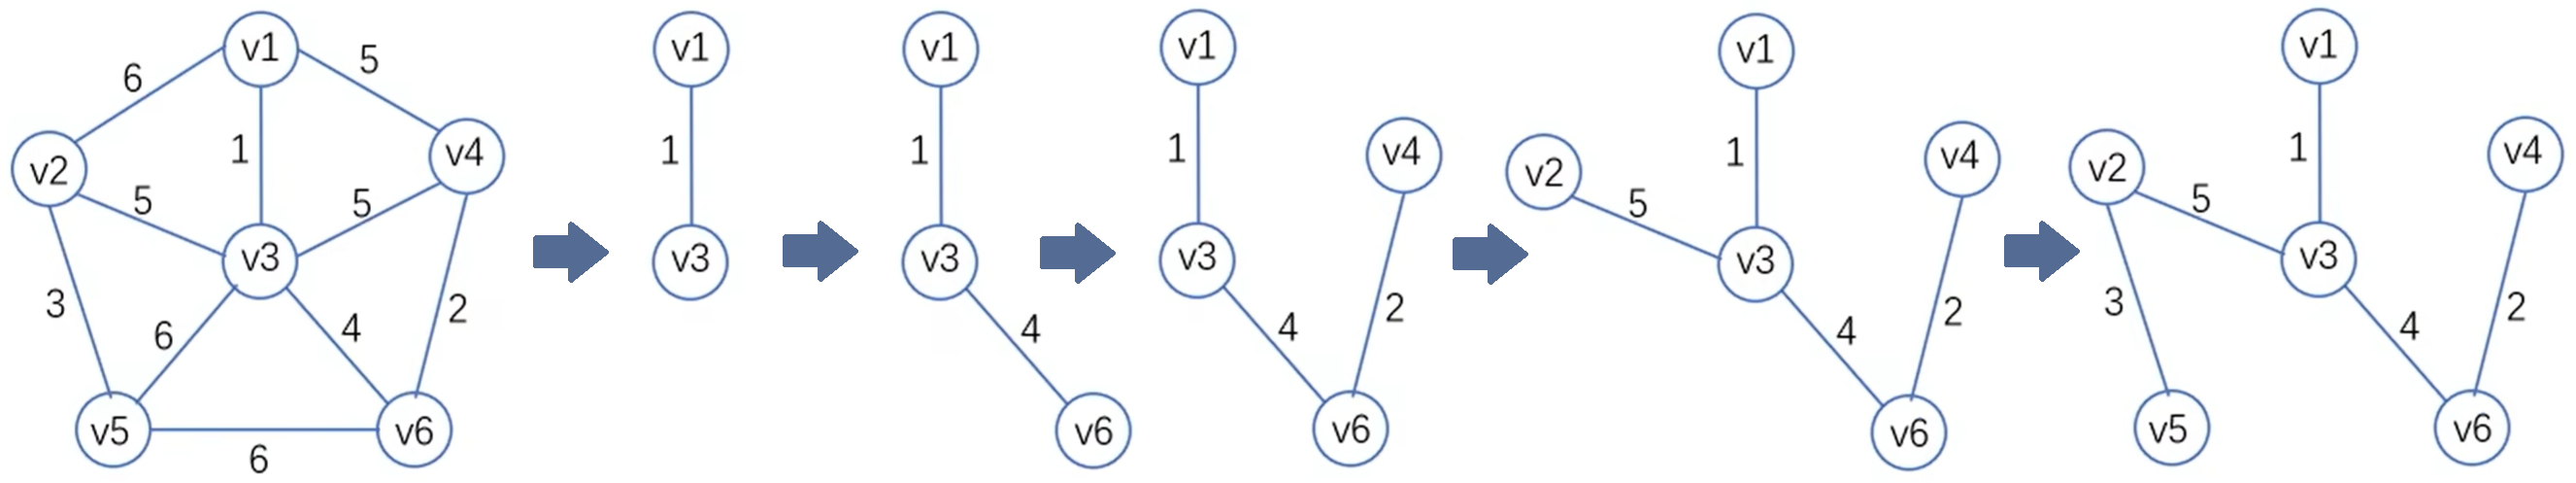 Prim's algorithm flow